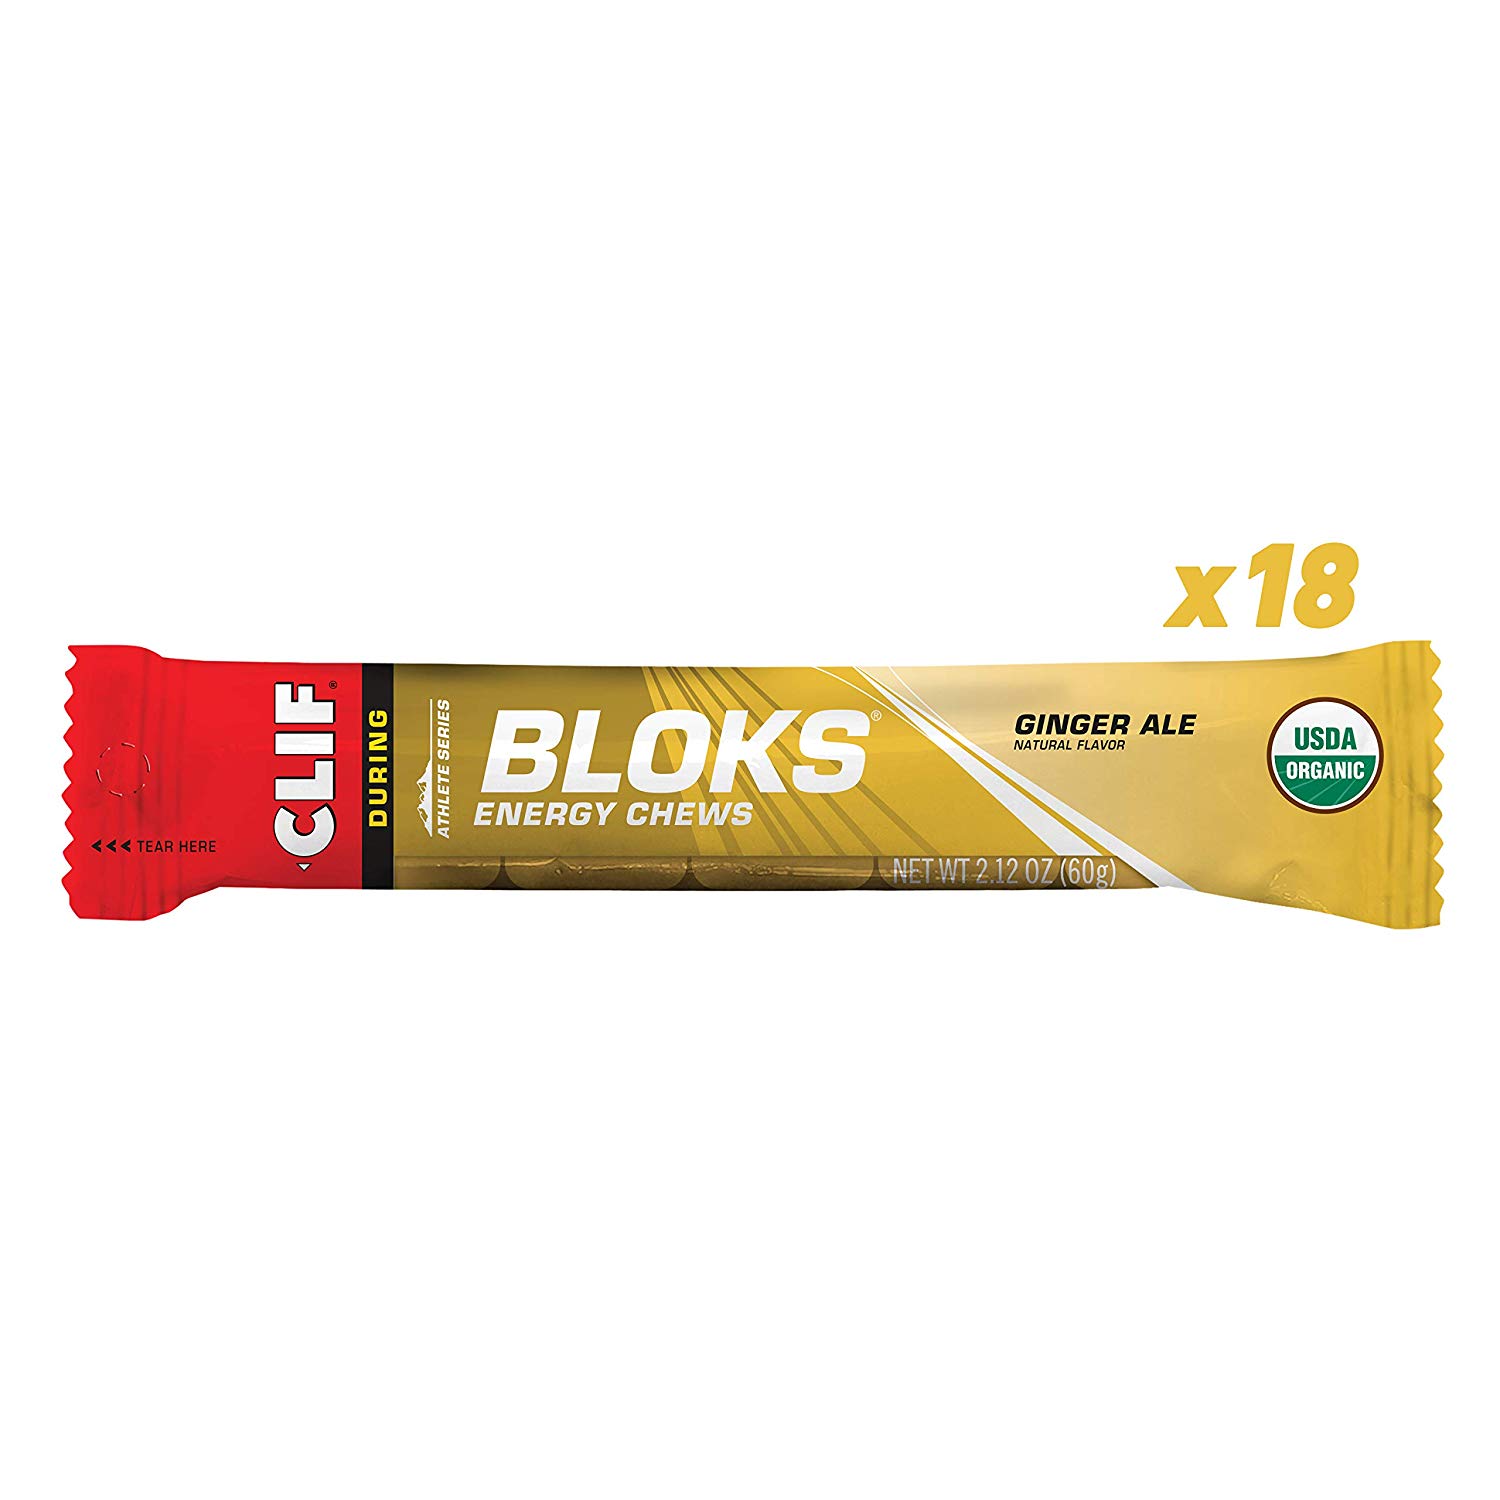 BLOKS Energy Chews ginger ale